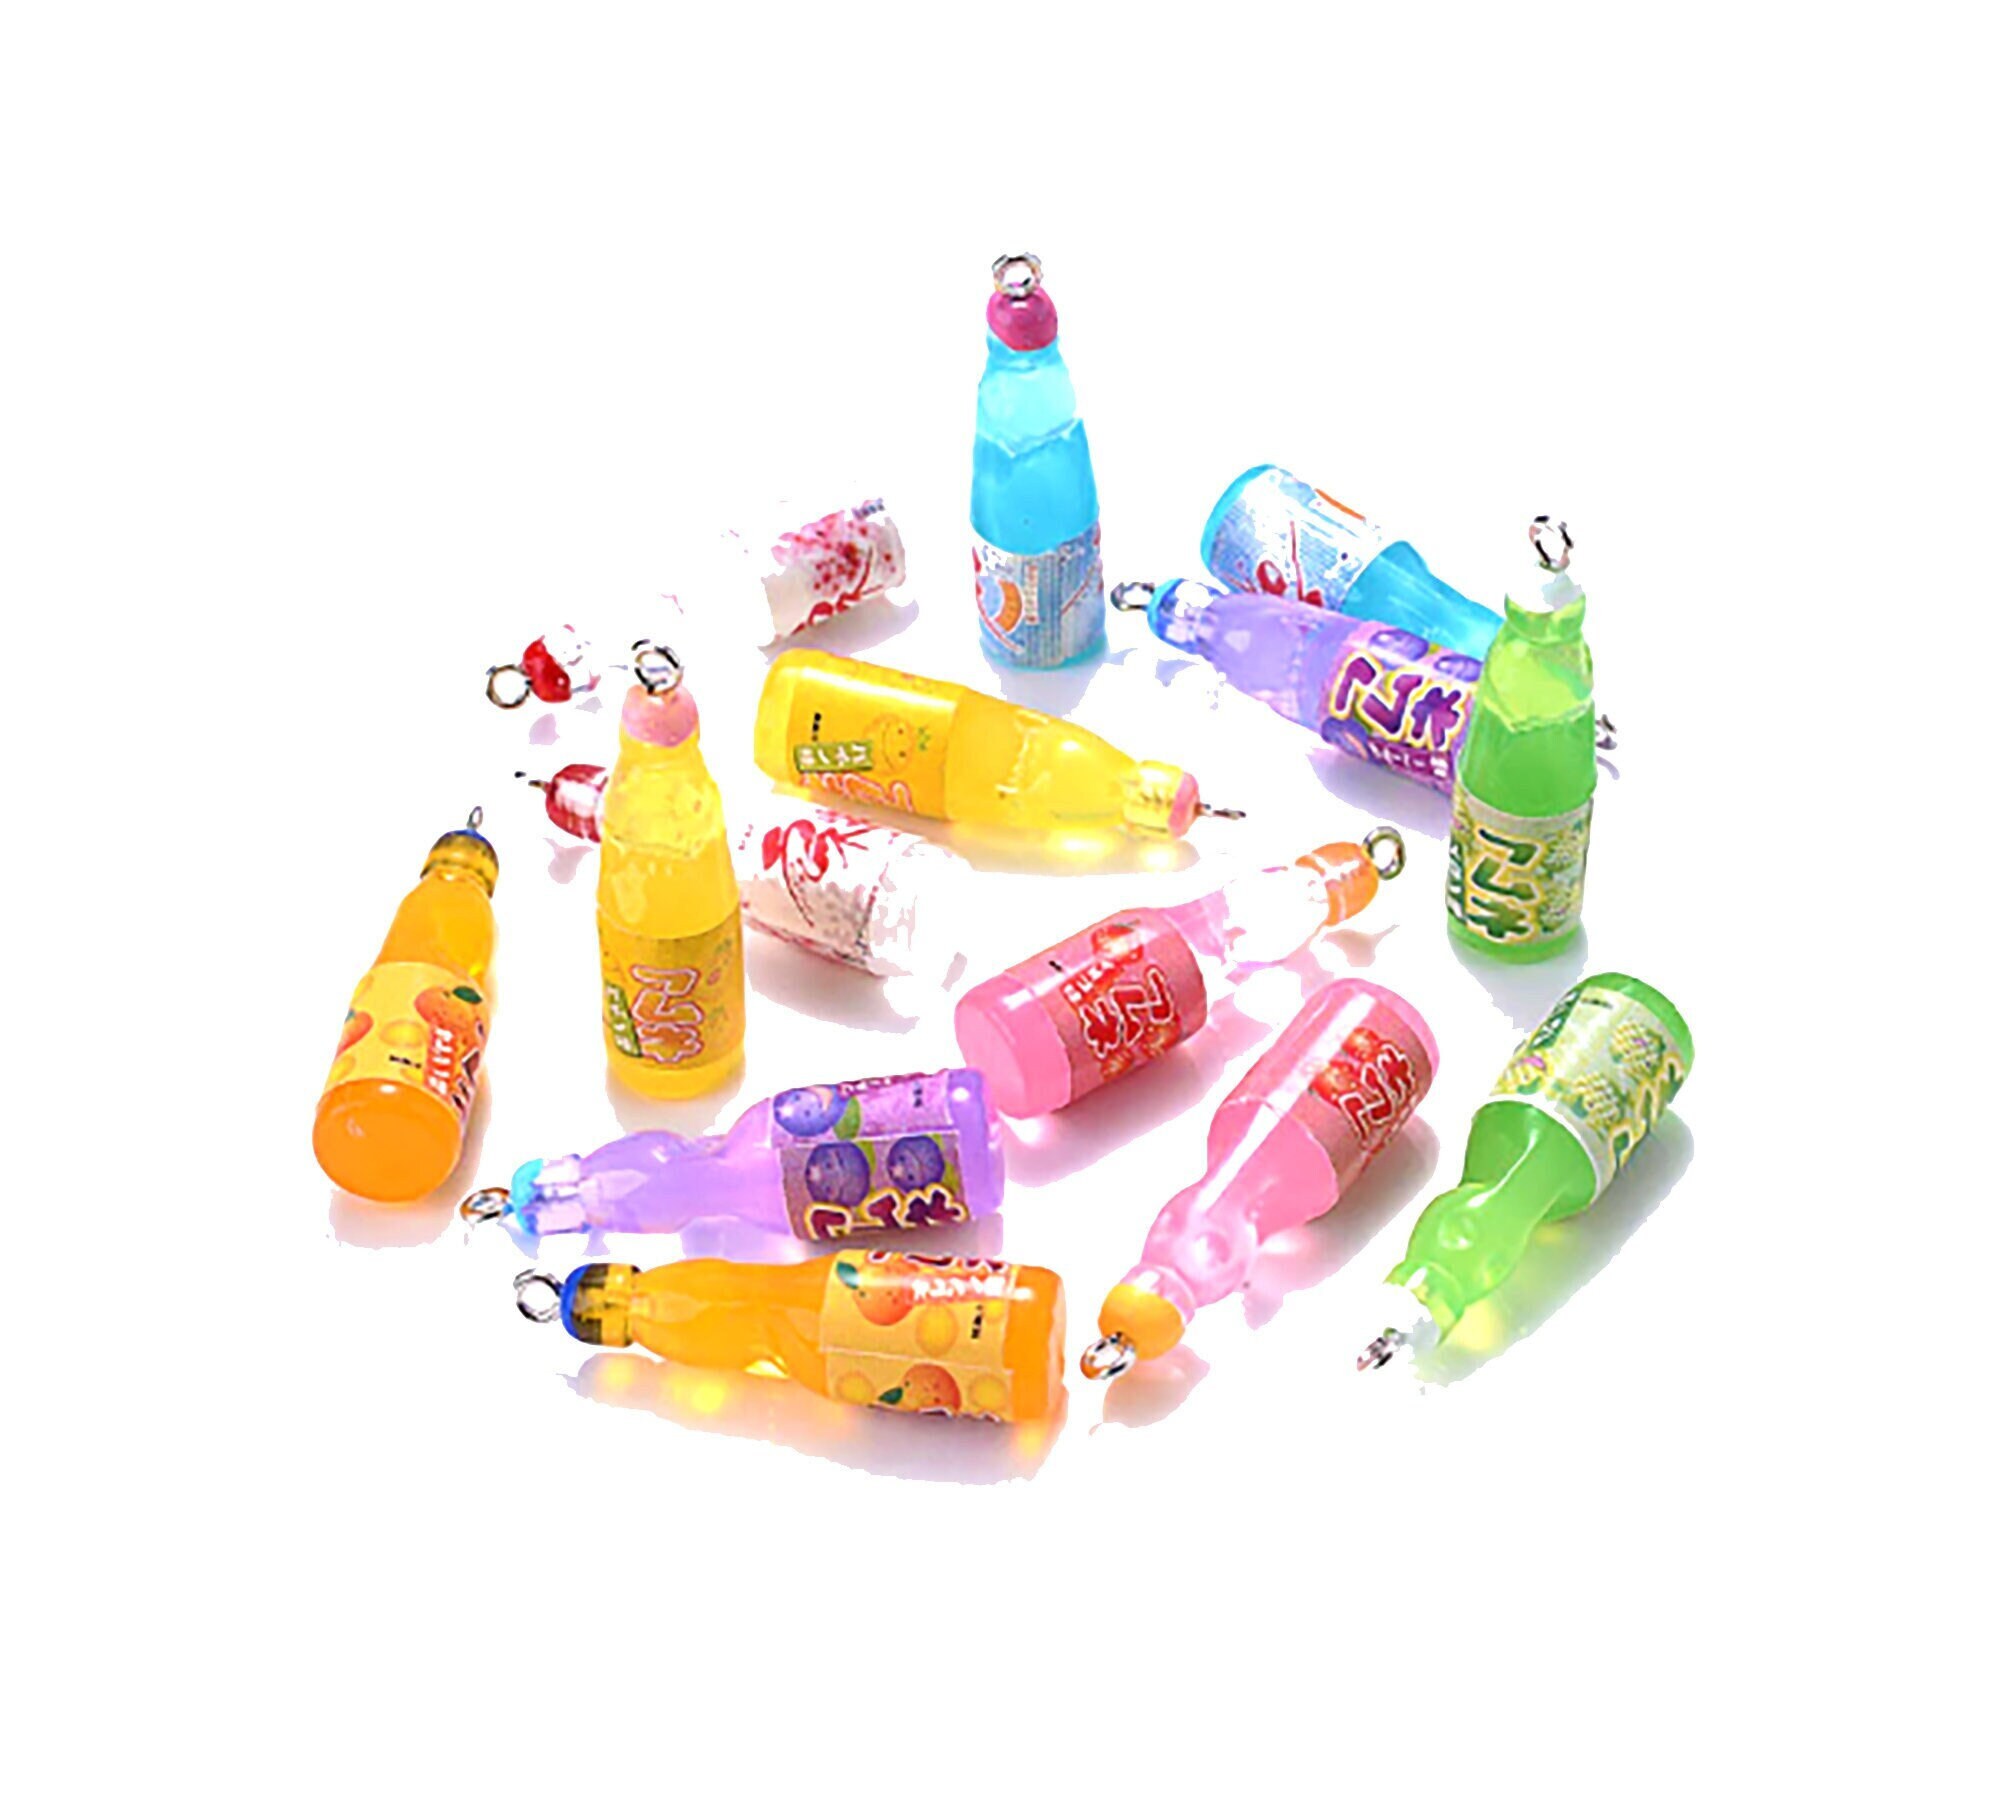 😍 Cute Miniature Bottle Charms!!llDIY Galaxy Bottle 